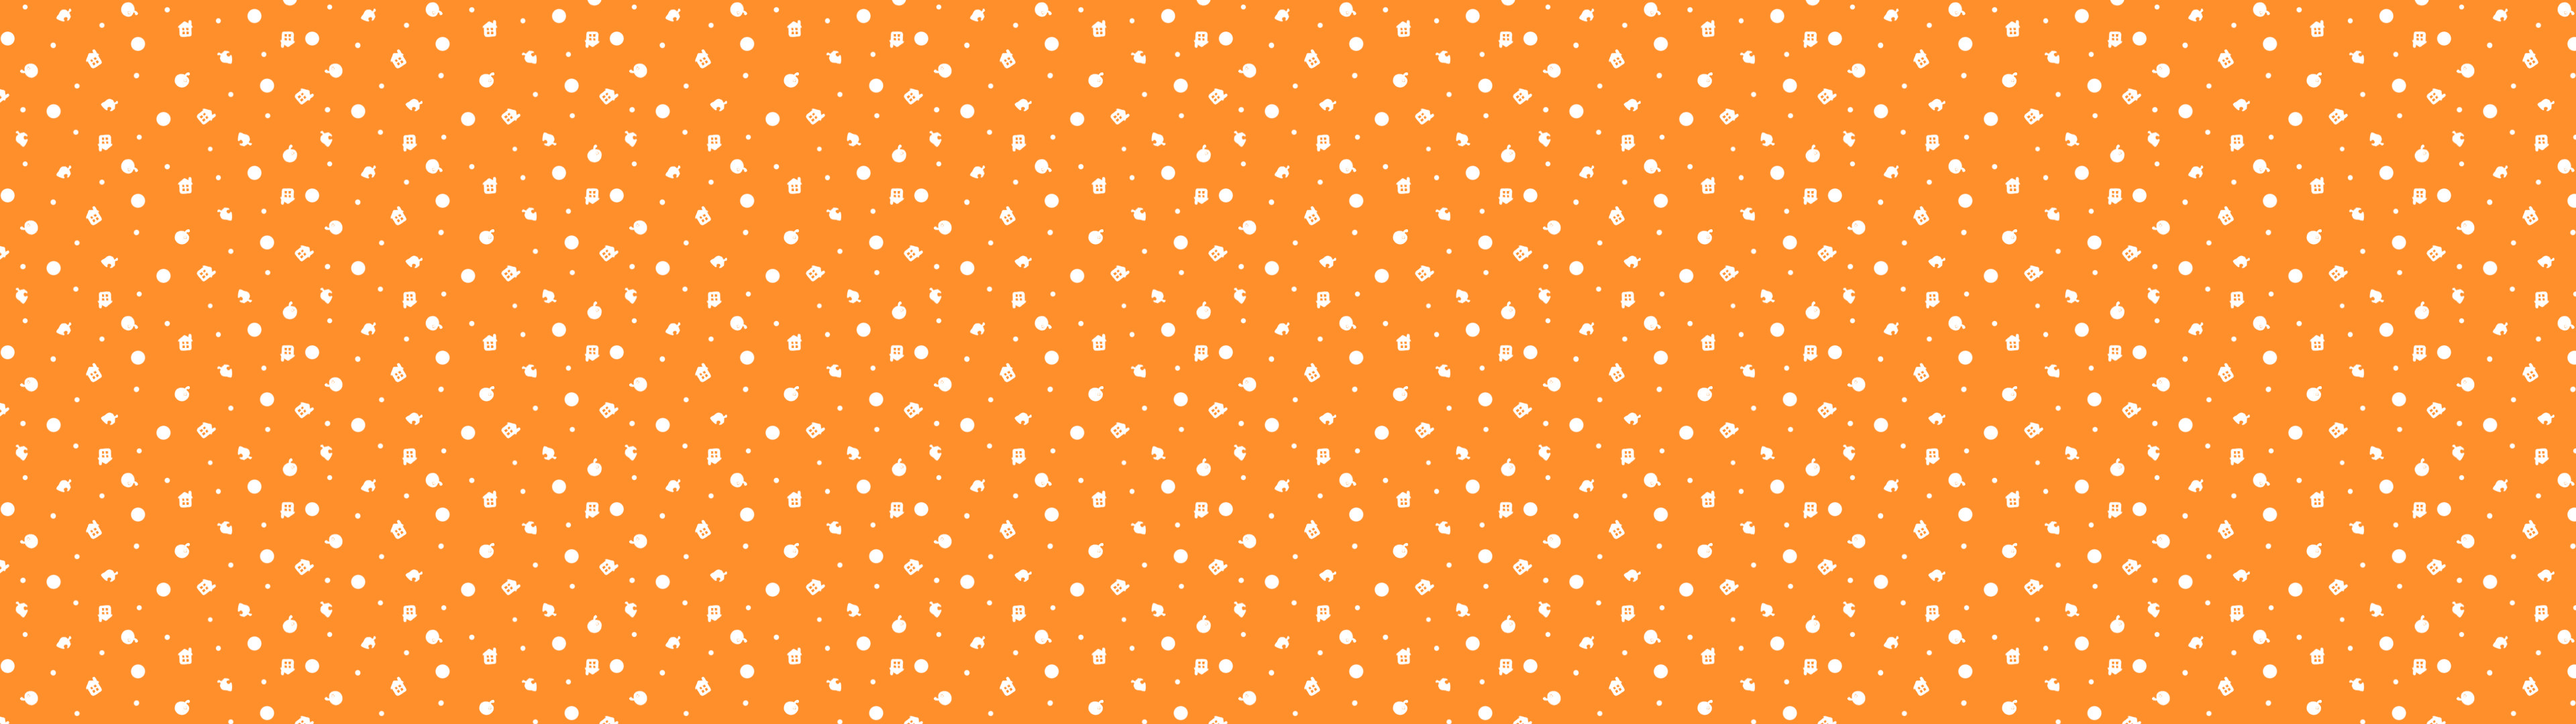 3840x1080 General  Animal Crossing Animal Crossing New Leaf New Leaf pattern  logo minimalism texture orange background